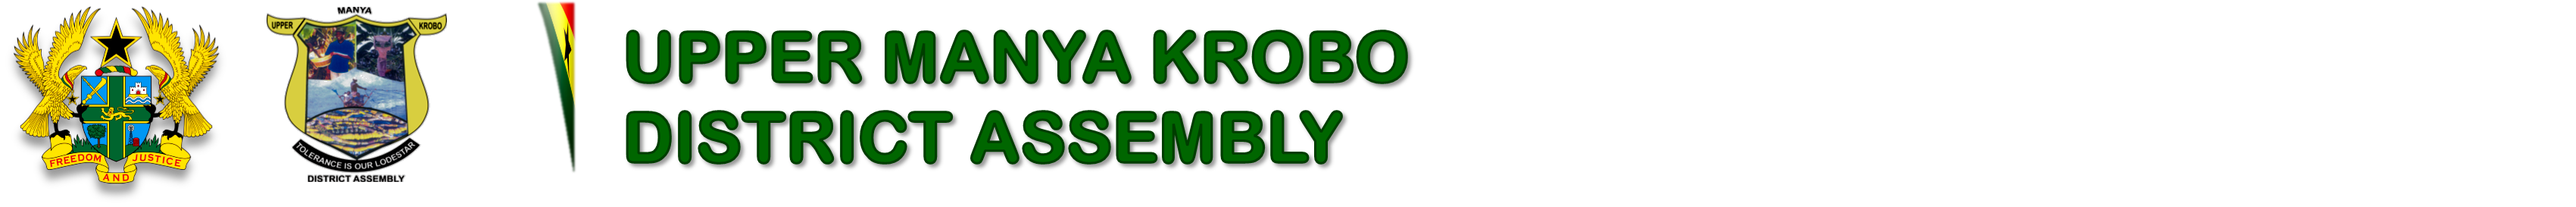 Upper Manya Krobo District Assembly Logo